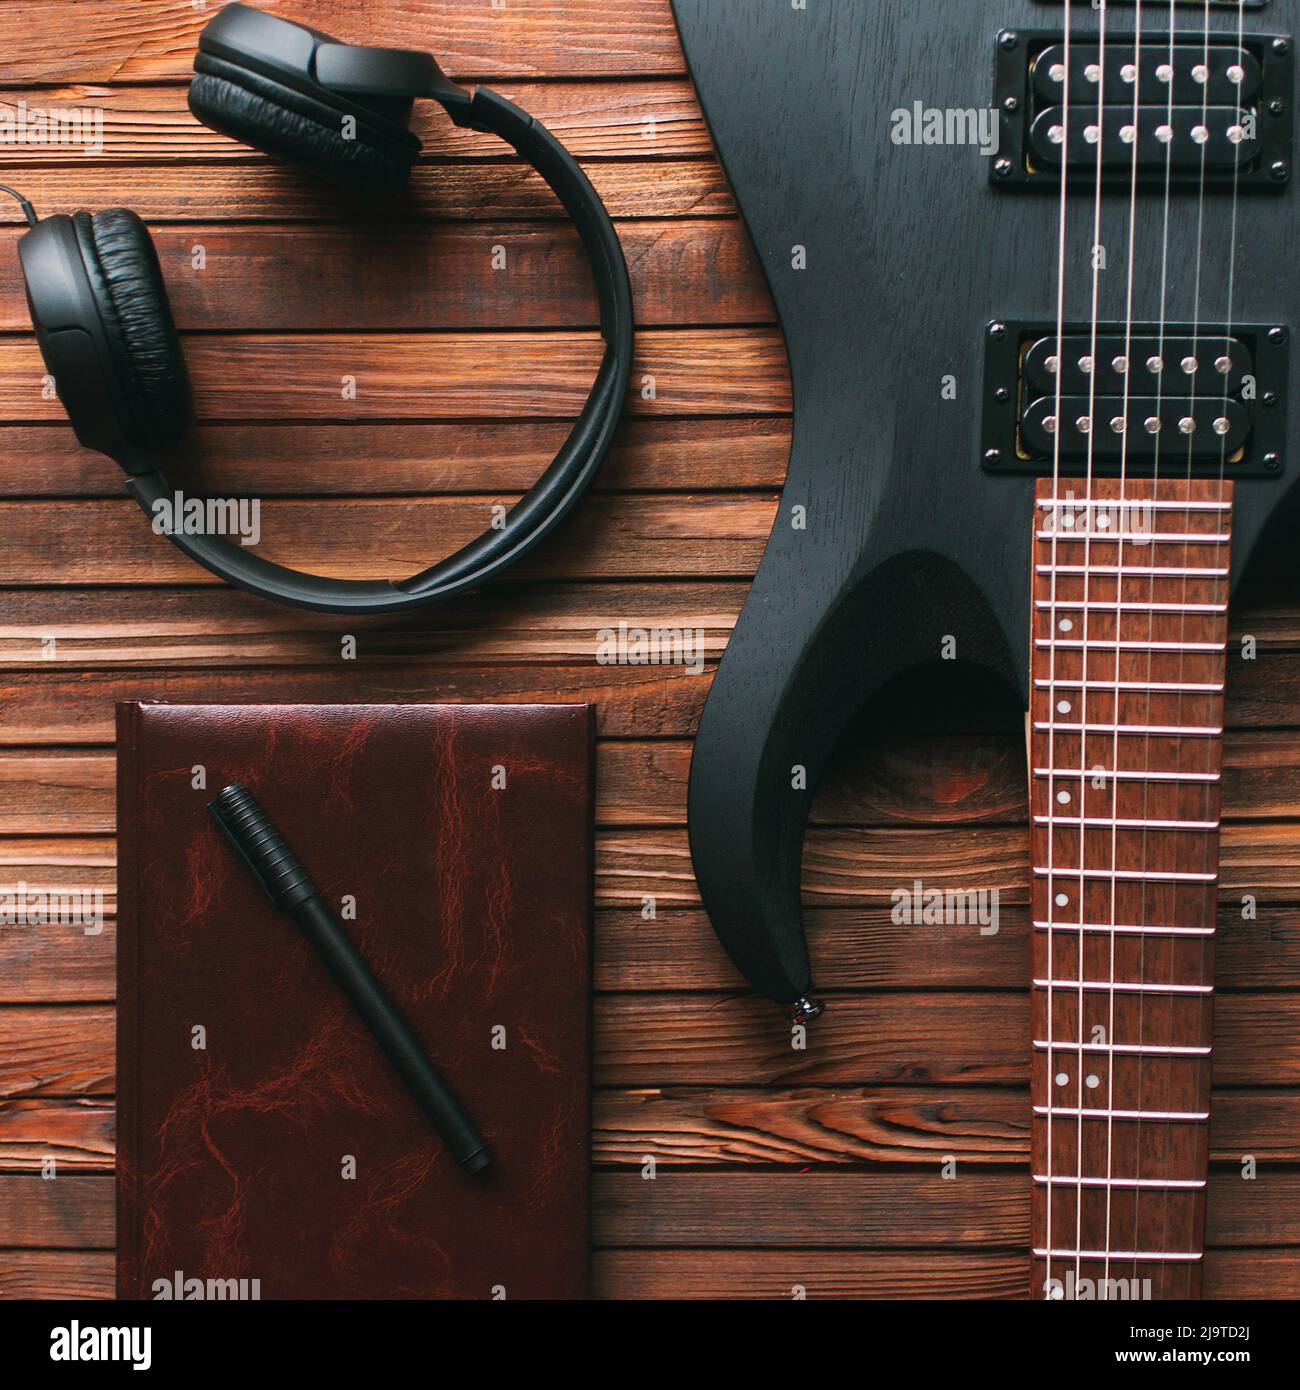 Guitarra superior de madera fotografías e imágenes de alta resolución -  Alamy